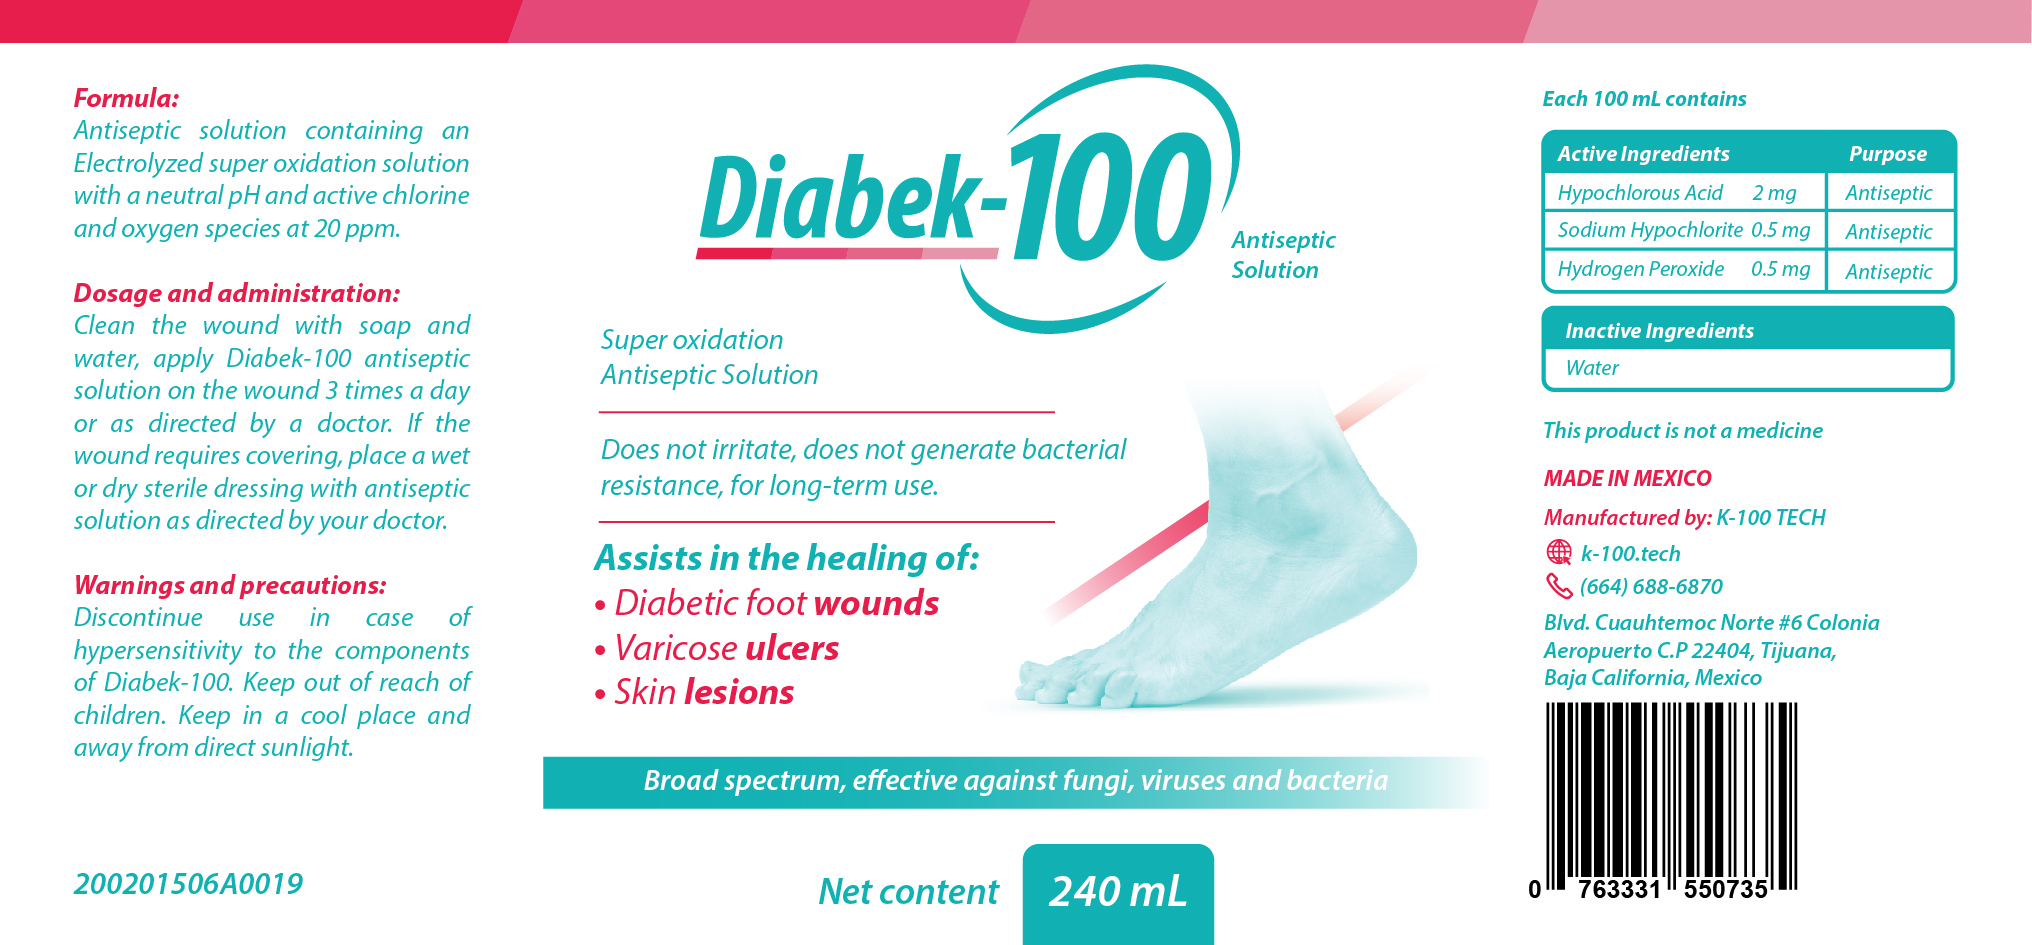 diabek-100 antiseptic solution